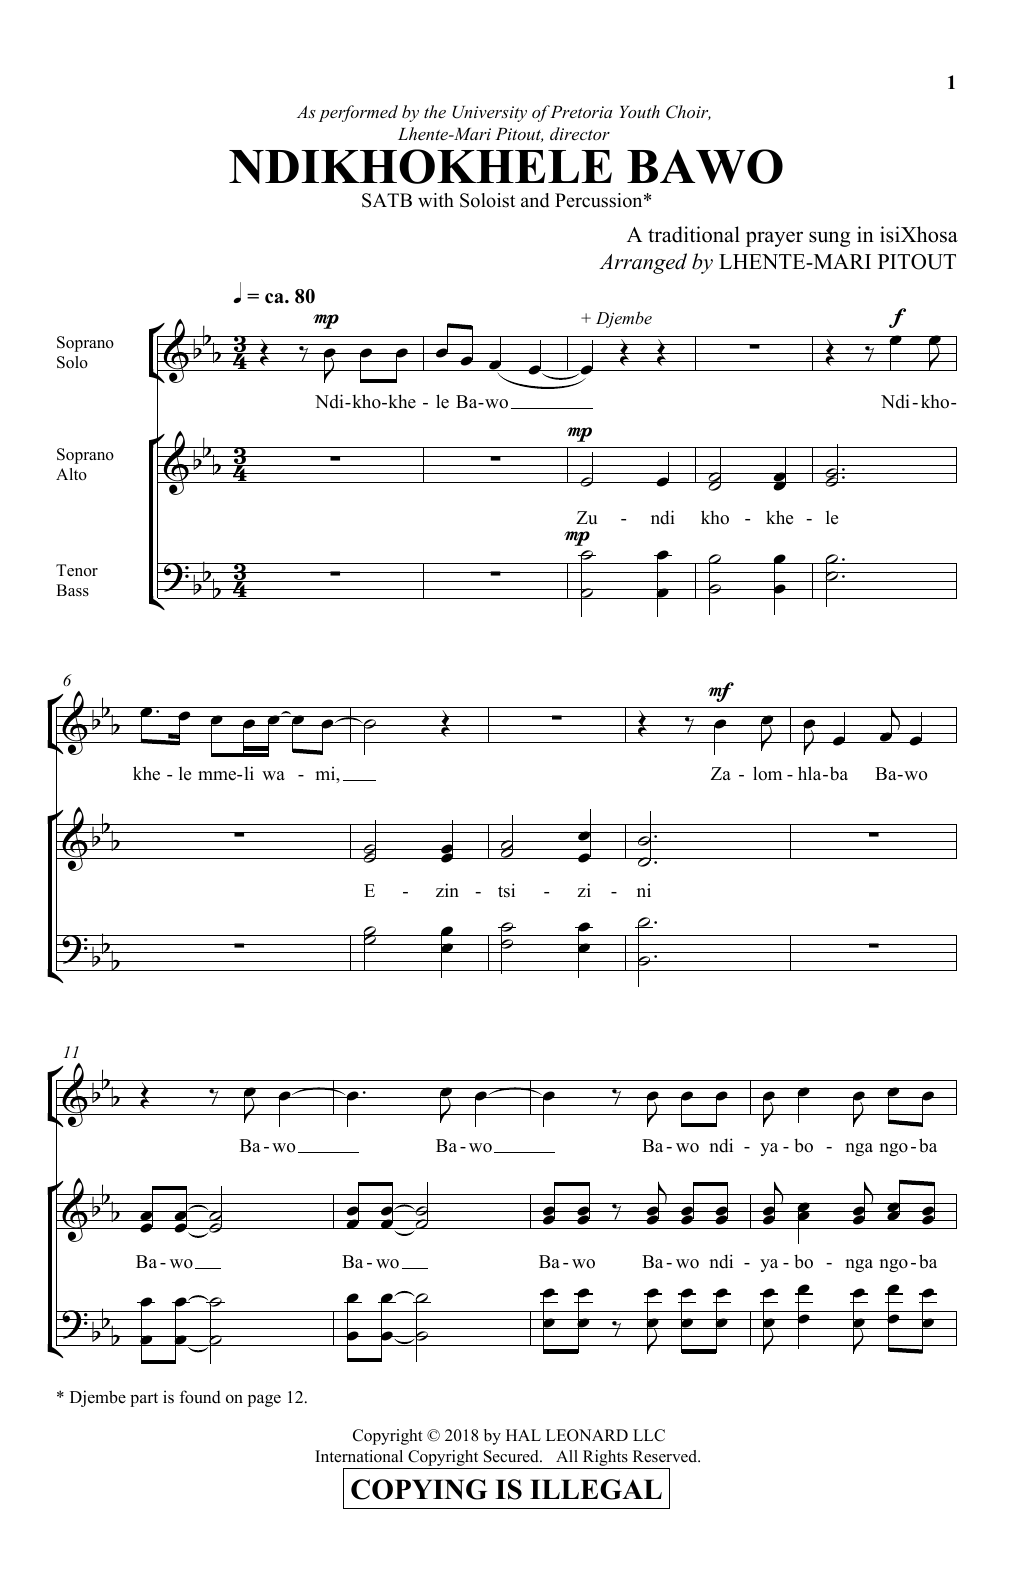 Lhente-Mari Pitout Ndikhokhele Bawo Sheet Music Notes & Chords for SATB Choir - Download or Print PDF